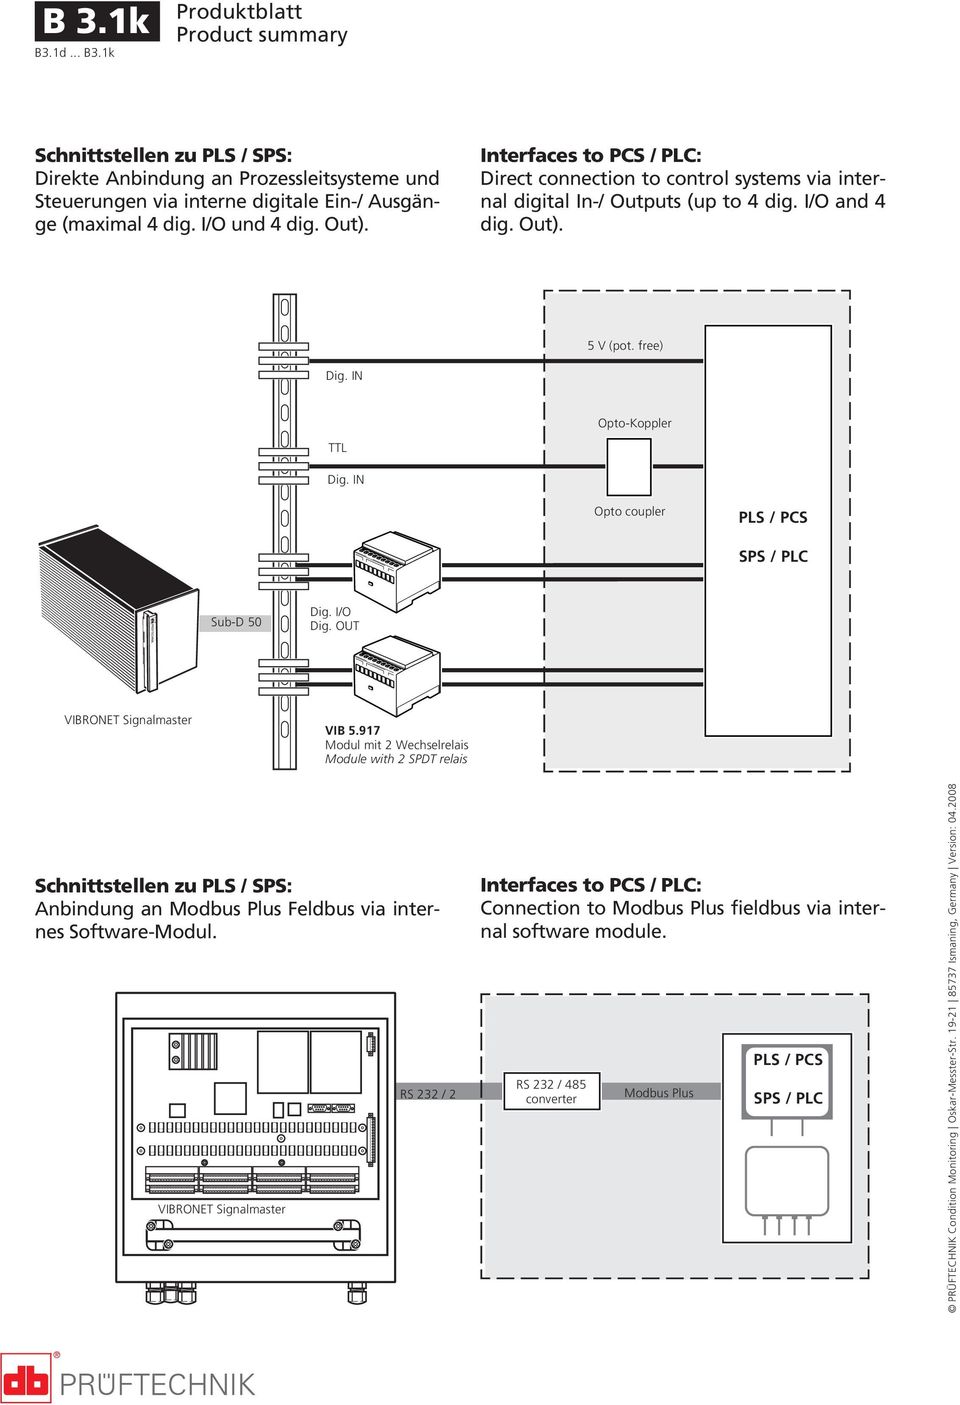 IN Opto coupler PLS / PCS SPS / PLC Sub-D 50 Dig. I/O Dig. OUT VIBRONET Signalmaster VIB 5.